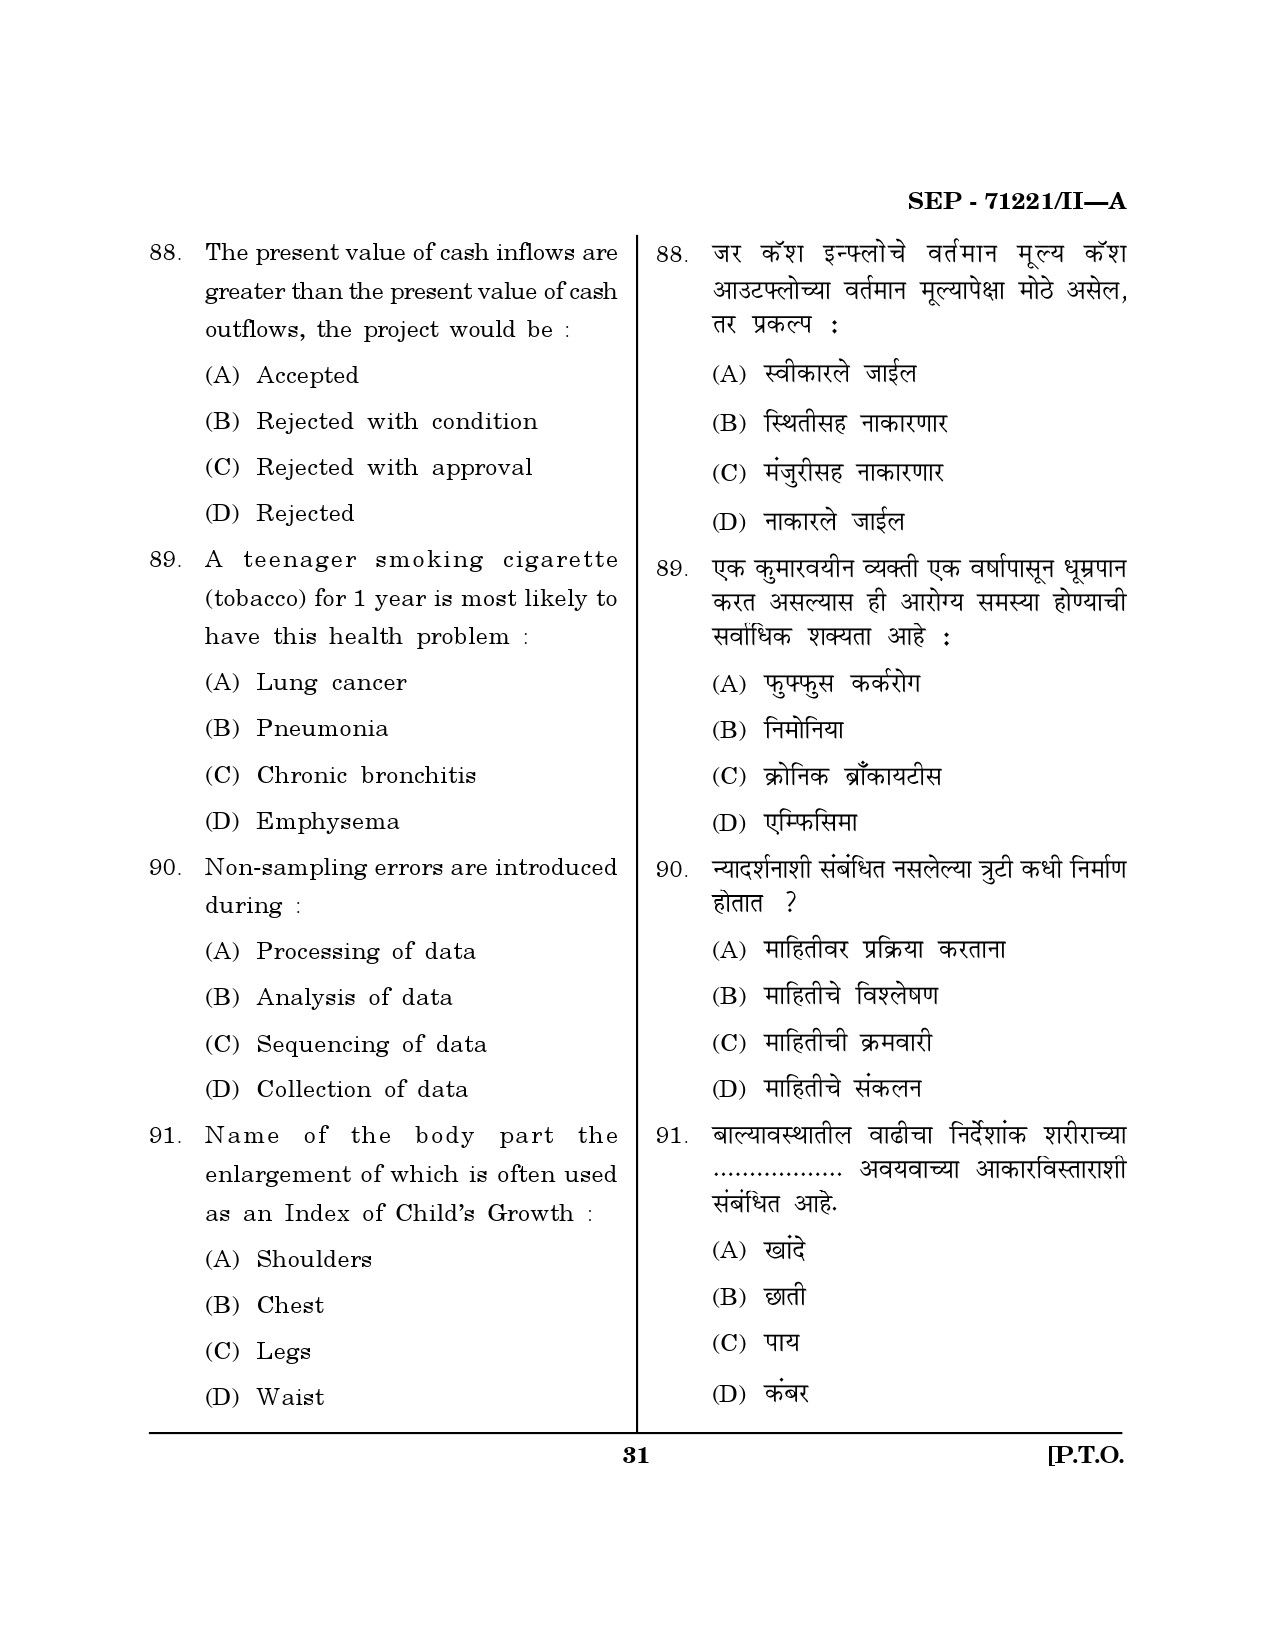 Maharashtra SET Physical Education Exam Question Paper September 2021 30